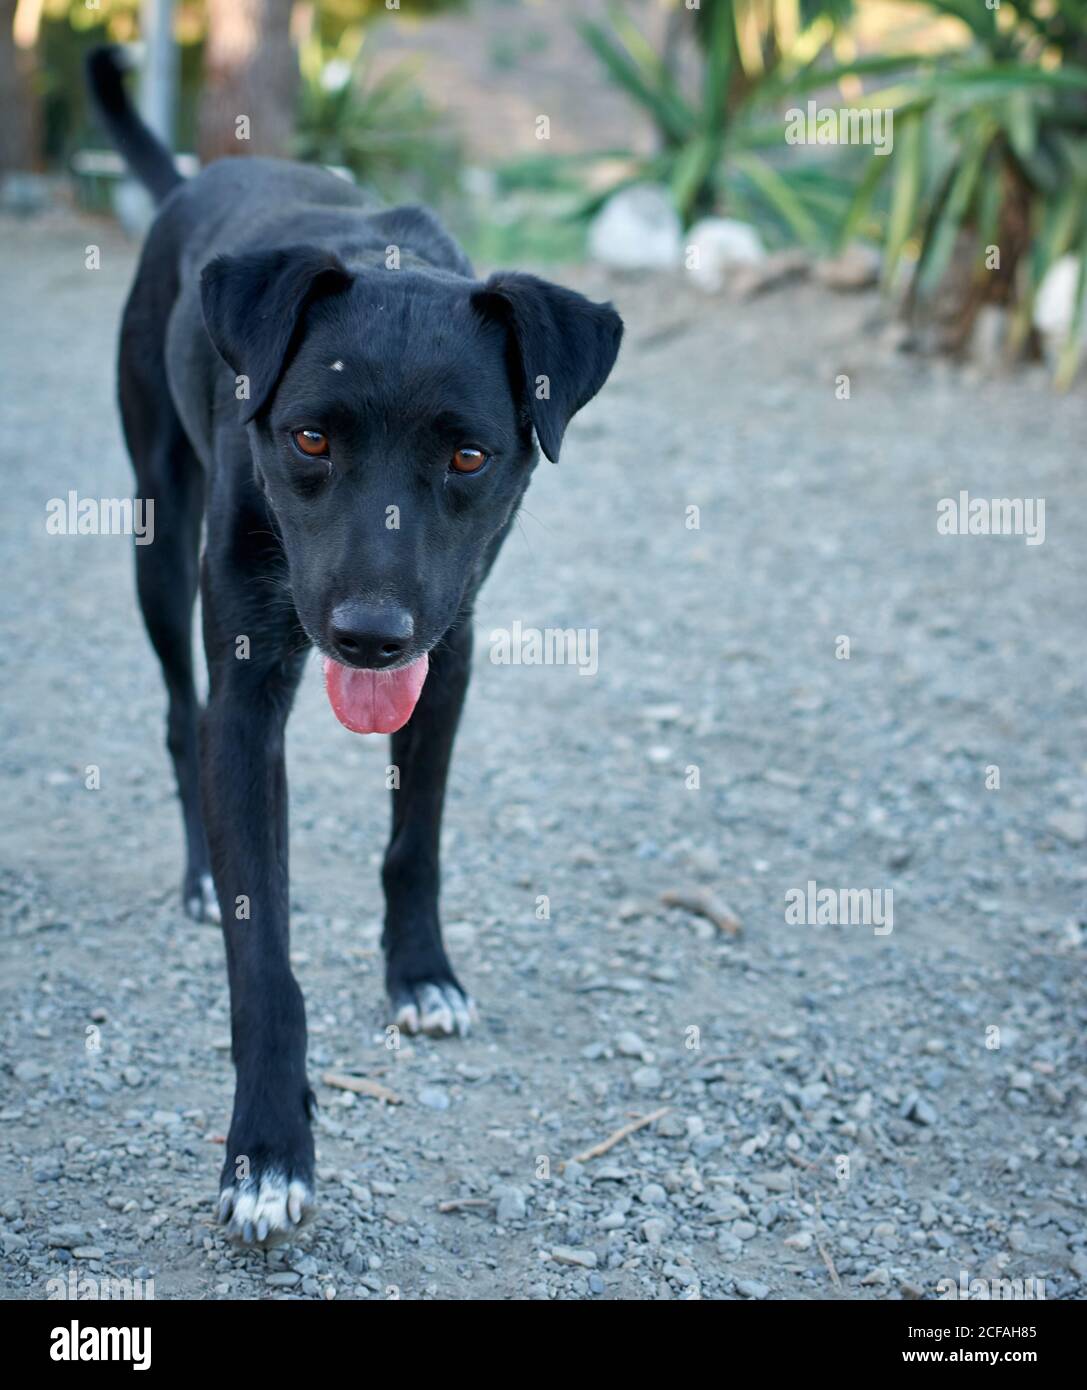 Cute black Patterdale Terrier dog walking on the asphalt ground Stock Photo